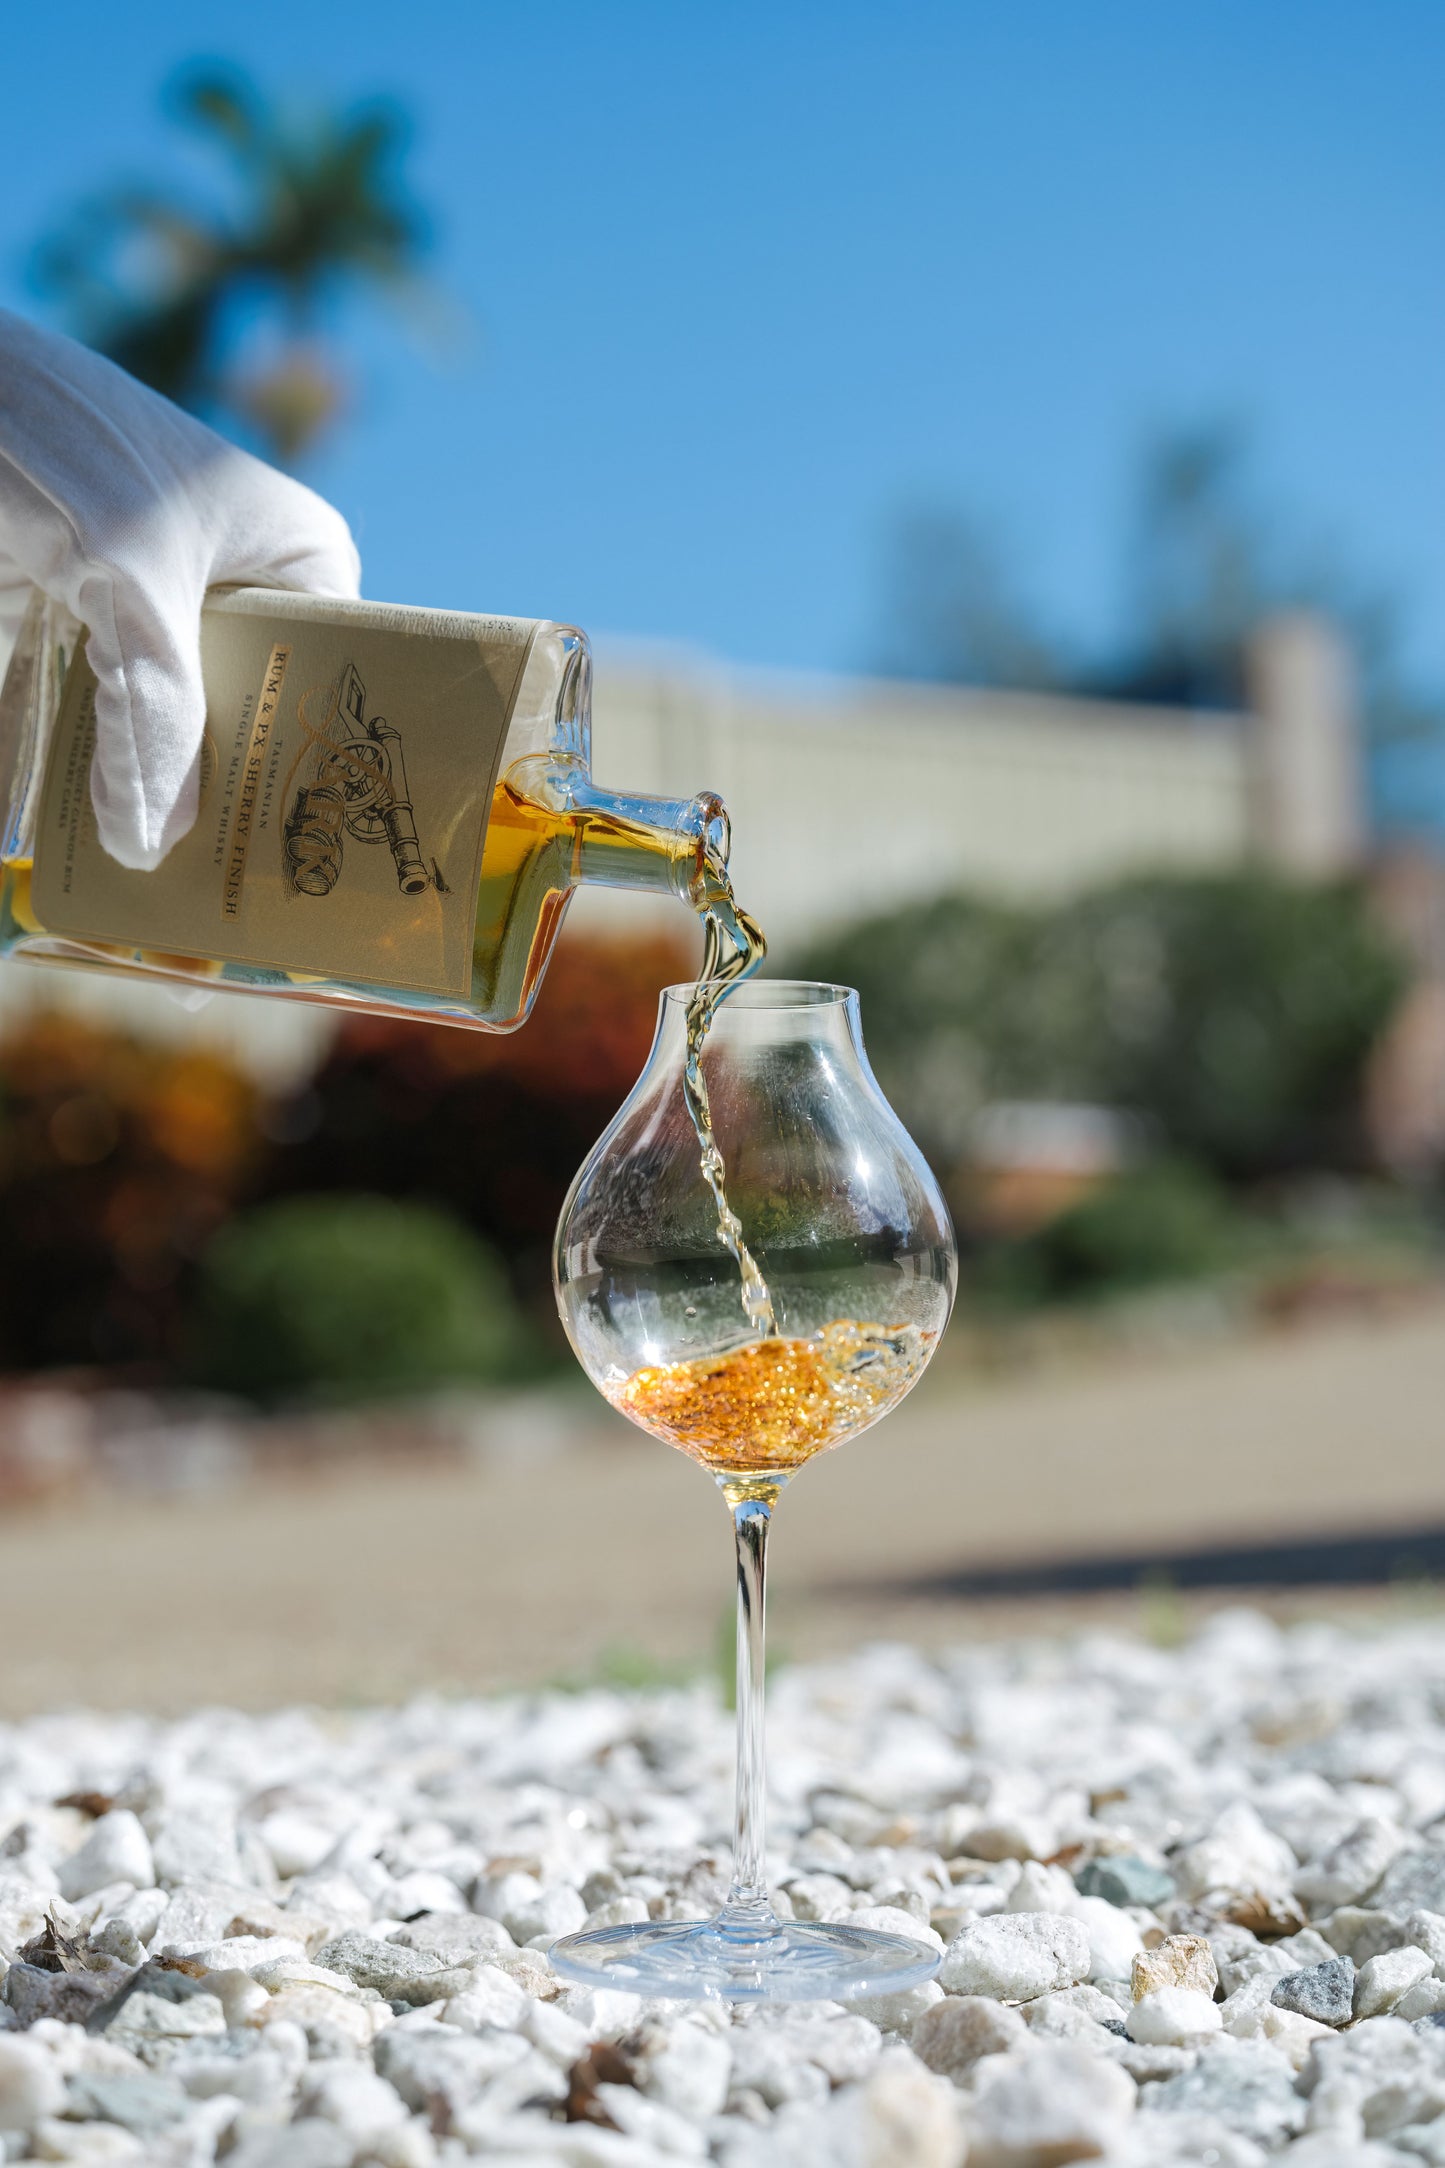 Whisky Nosing/Tasting Glass "Professional Blender's glass" | LubanSelect